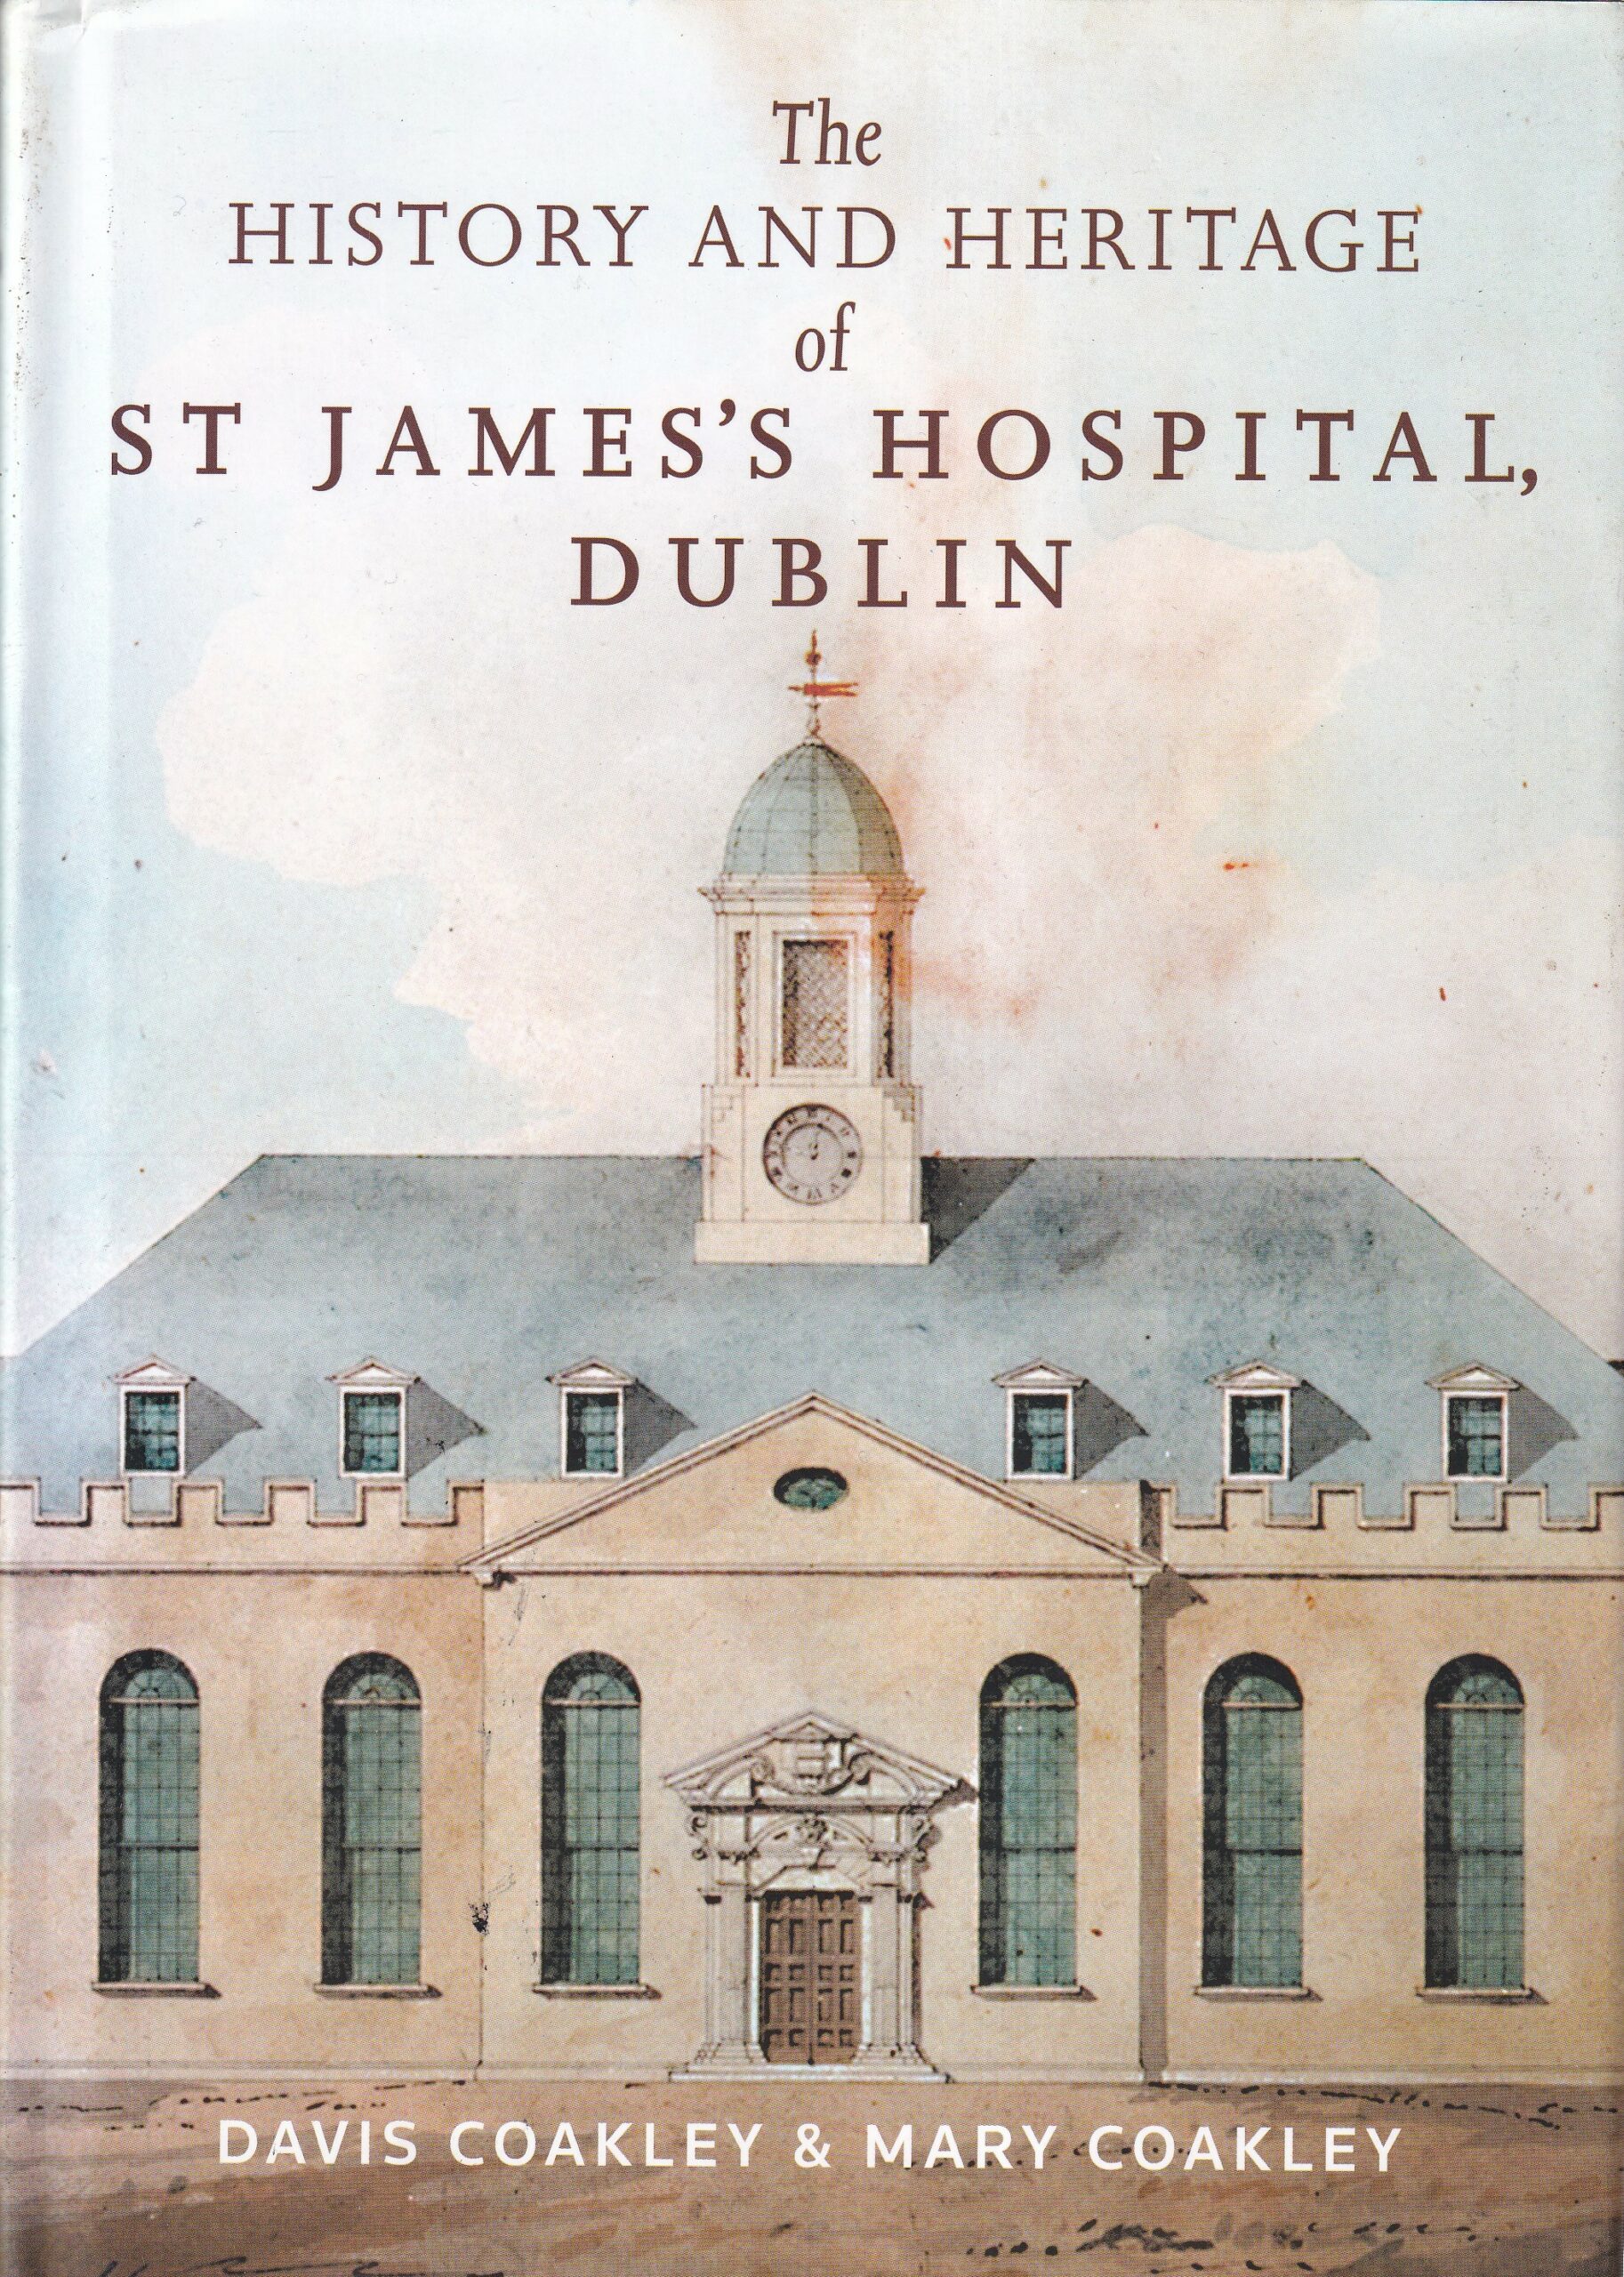 The History and Heritage of St. James’s Hospital Dublin by Davis Coakley and Mary Coakley